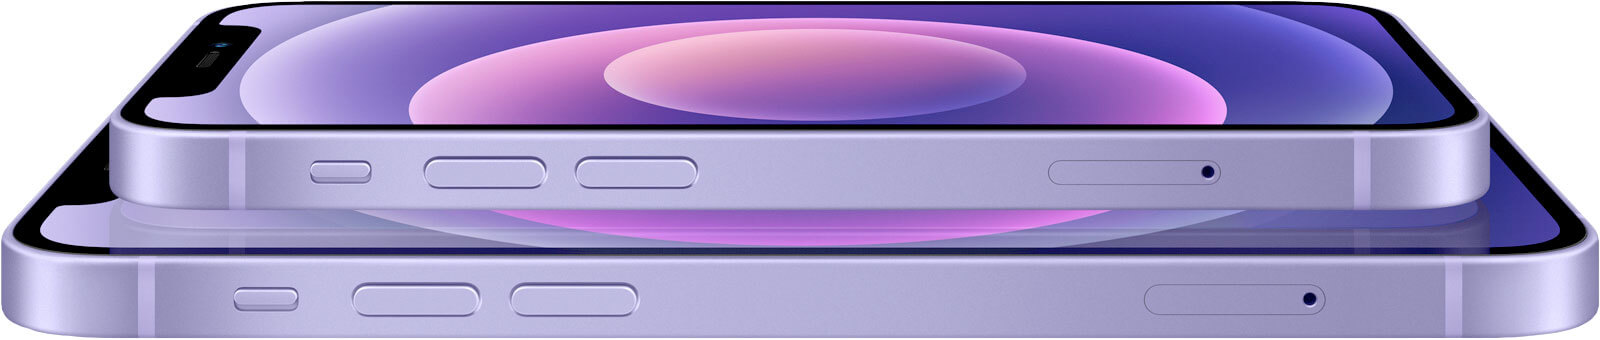 Nuevo iPhone 12 Púrpura Barato